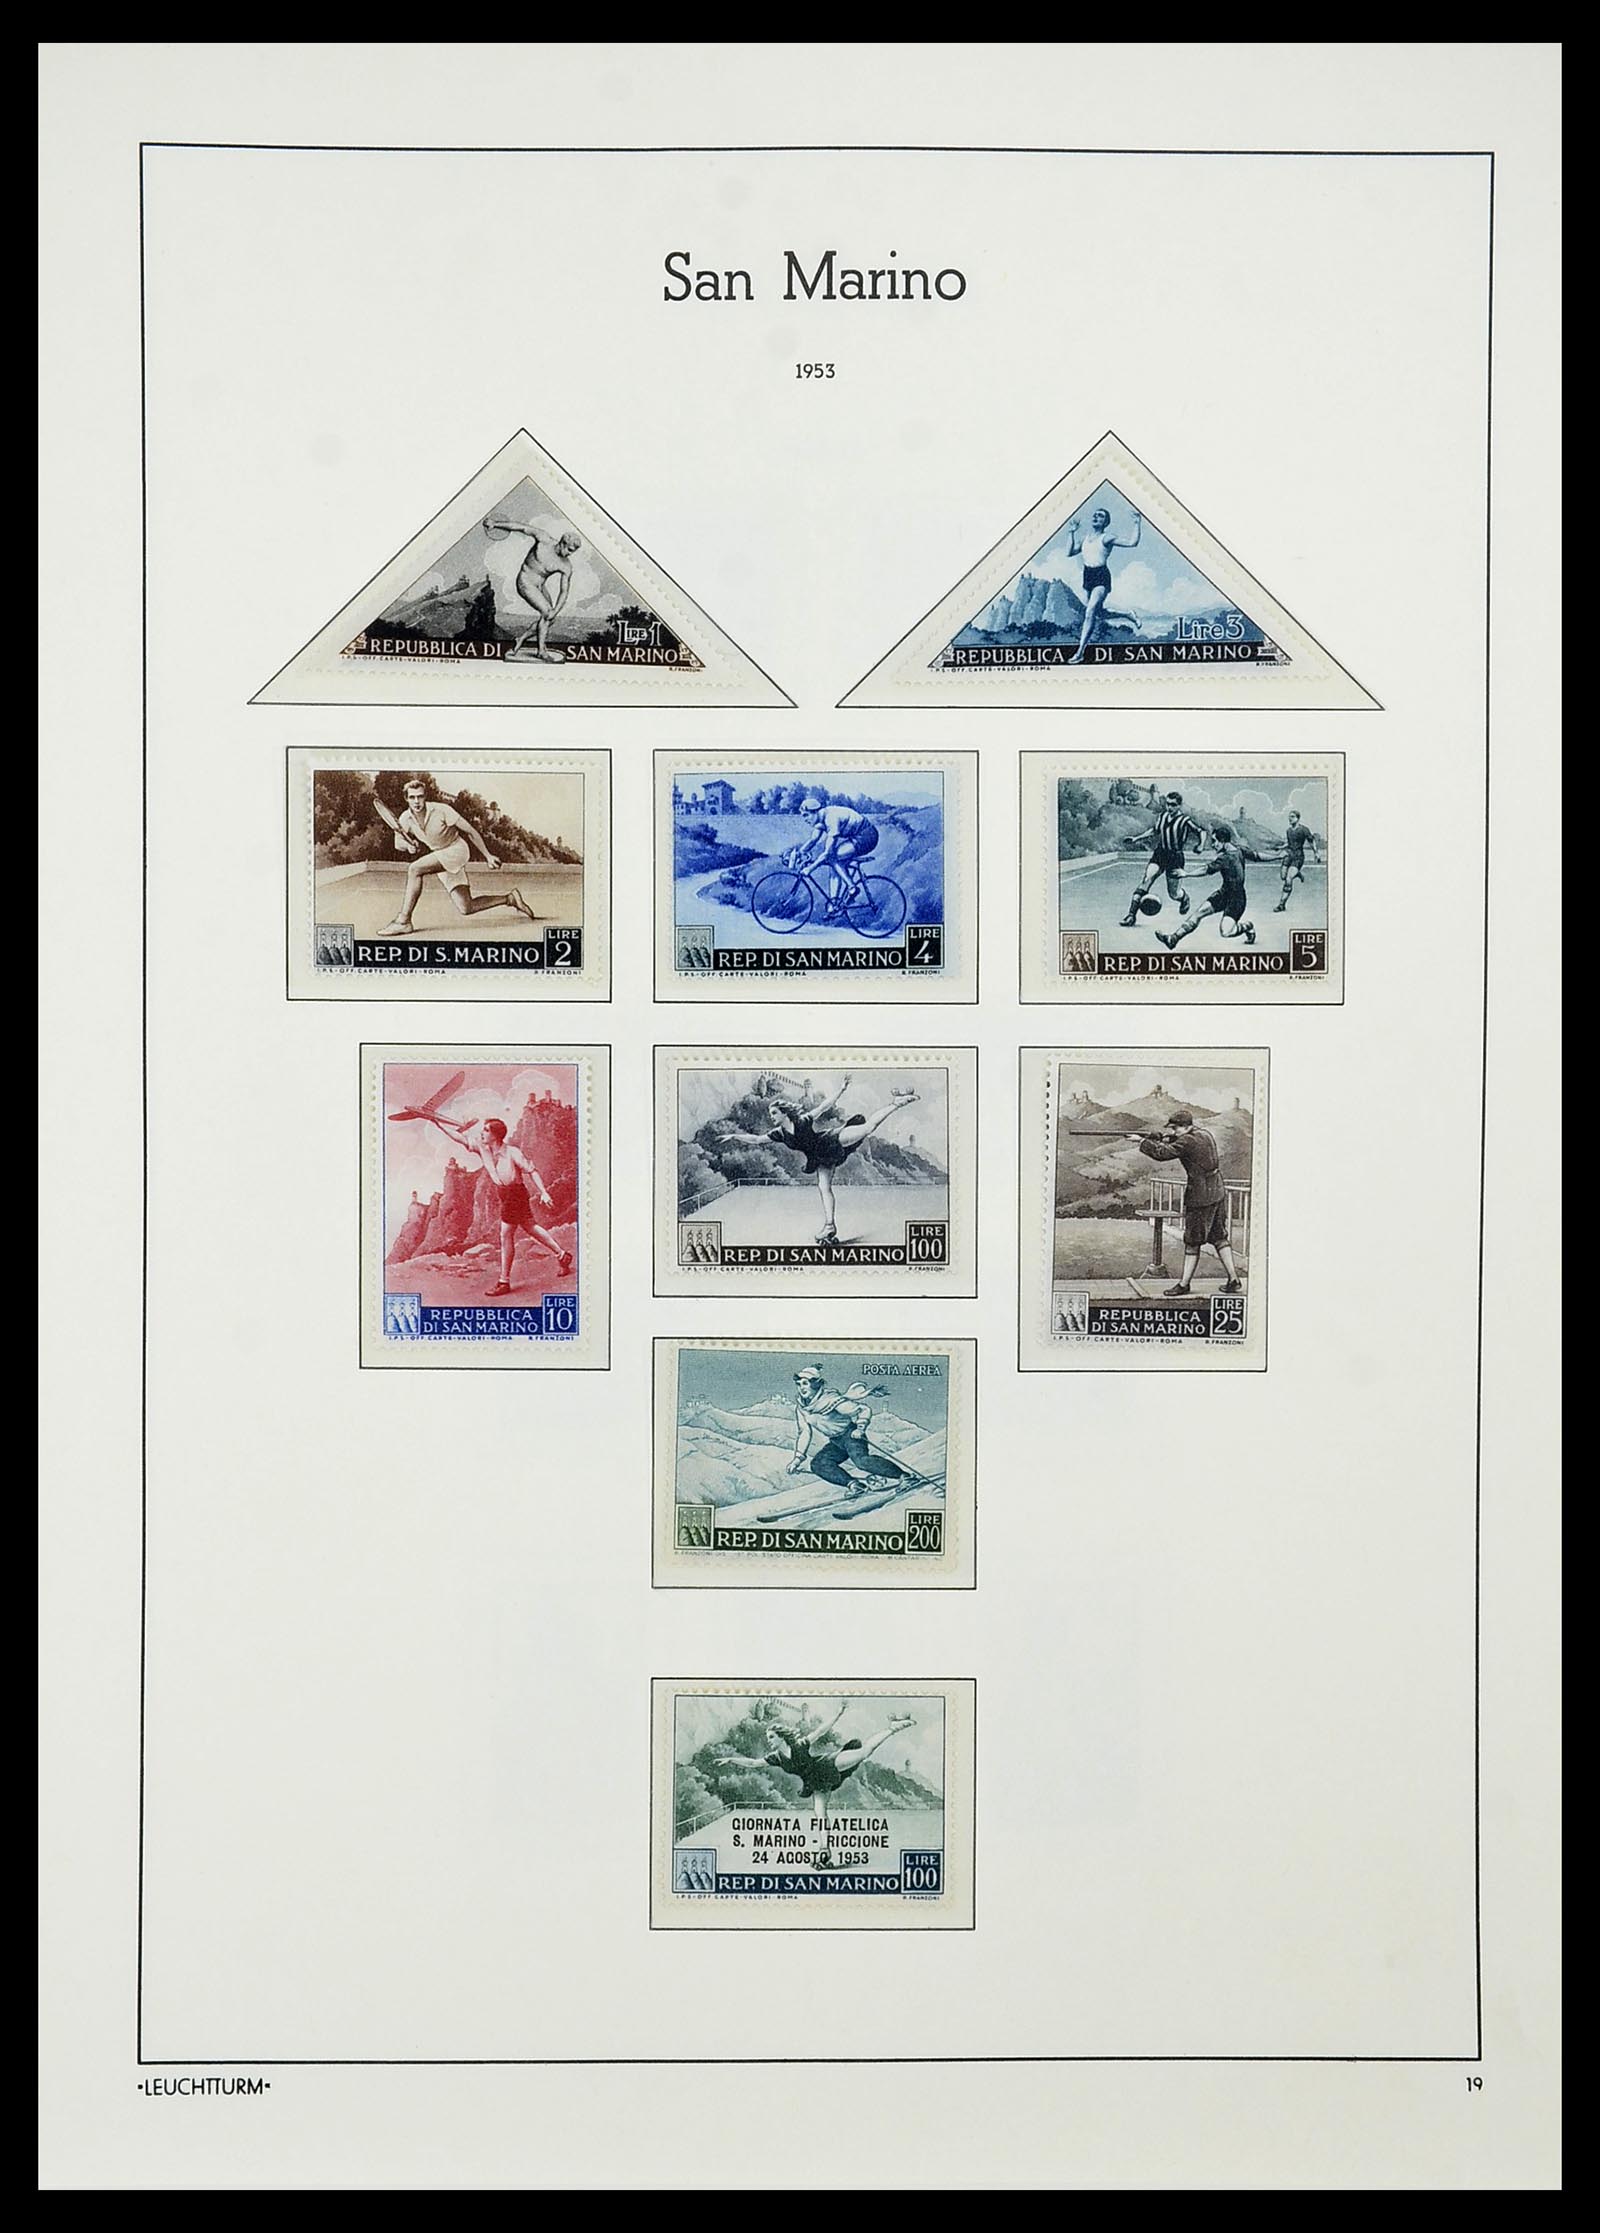 34243 054 - Stamp collection 34243 San Marino 1877-2008.